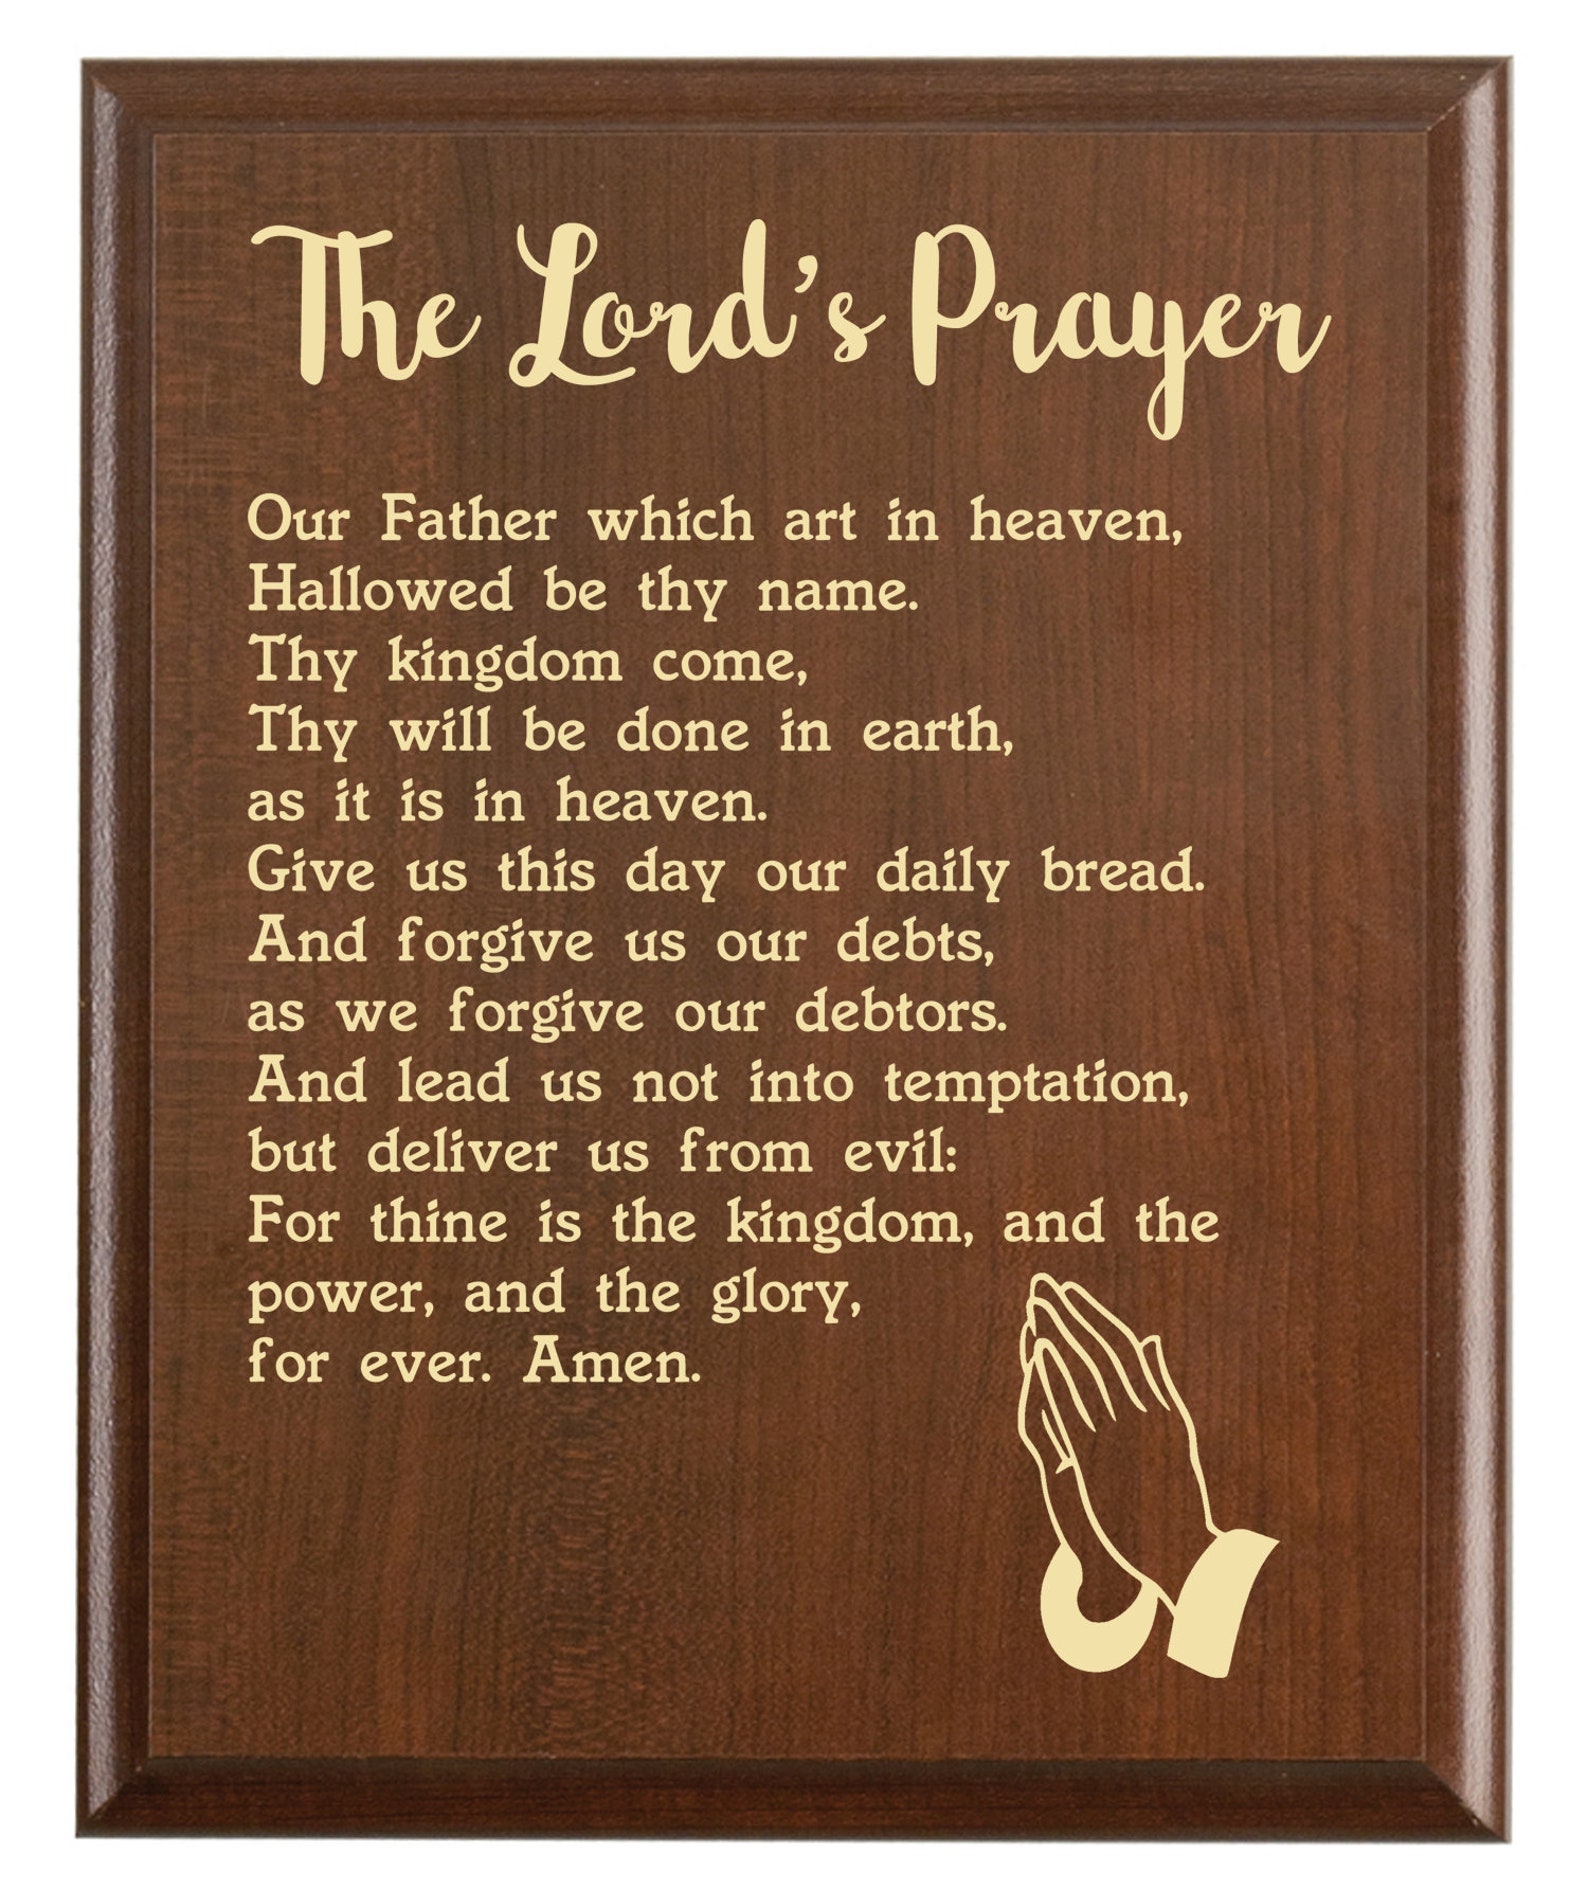 Prayers Based On The Lord S Prayer